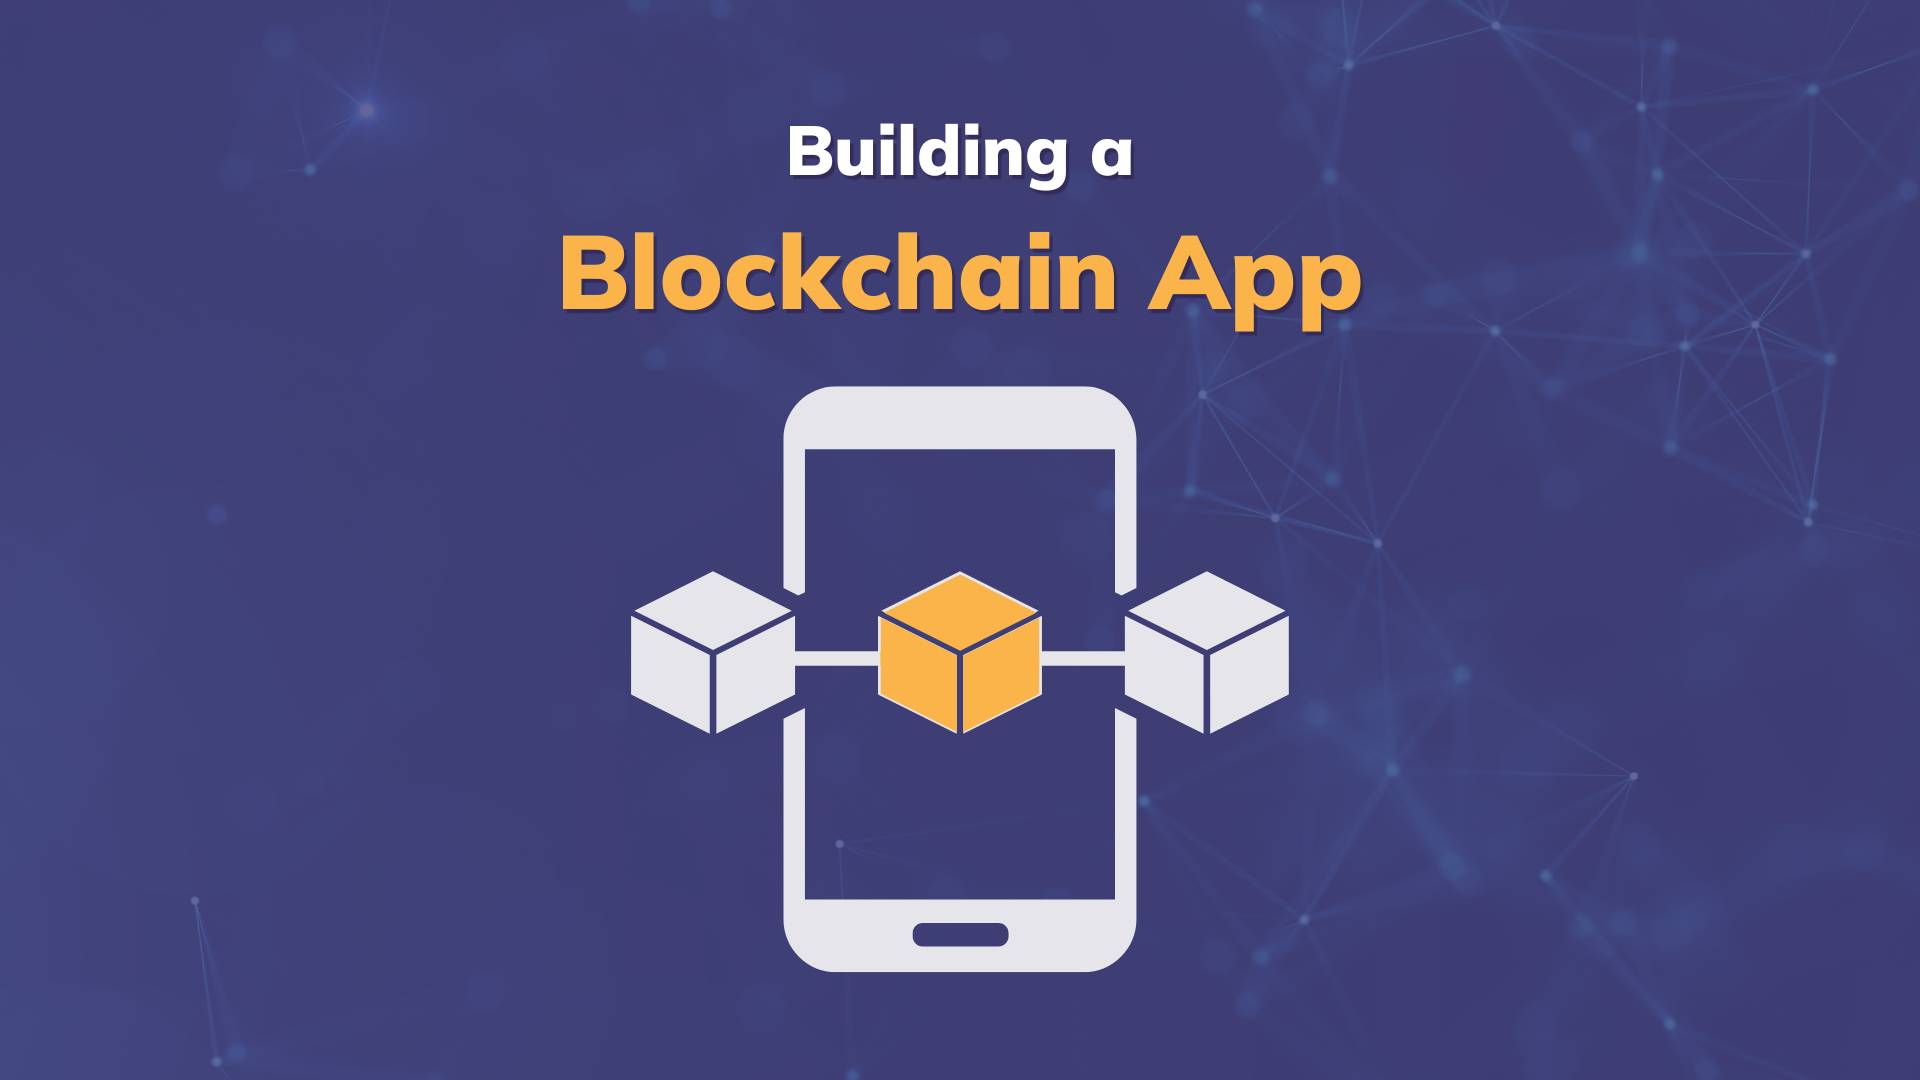 Ian Writes A Blockchain App